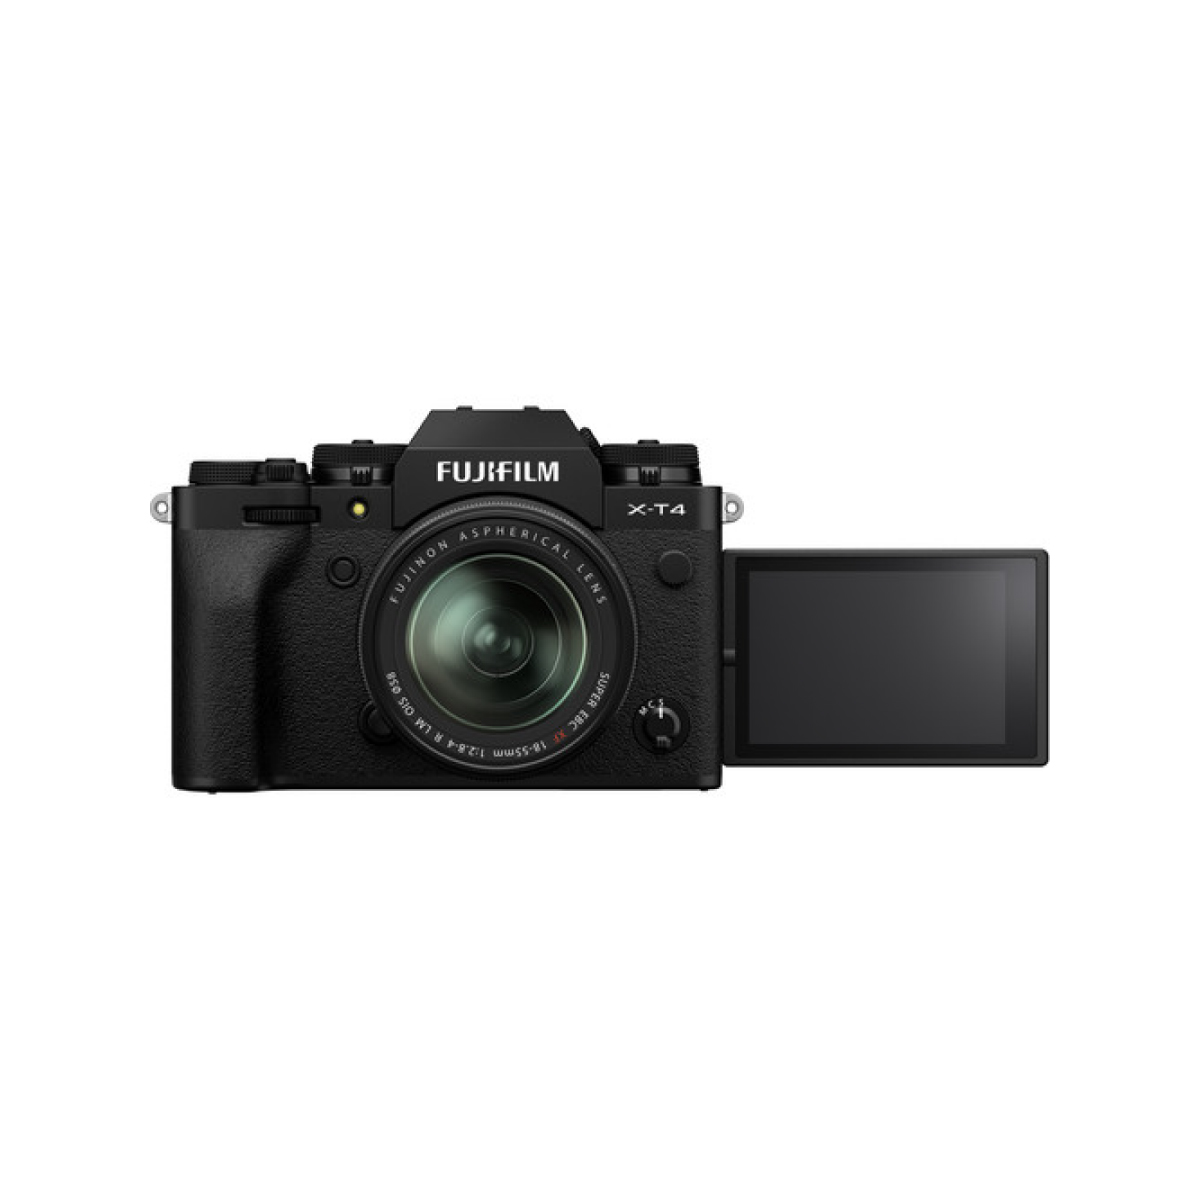 Fujifilm X-T4 26MP Mirrorless Camera Body with XF18-55mm Lens – Black (4)